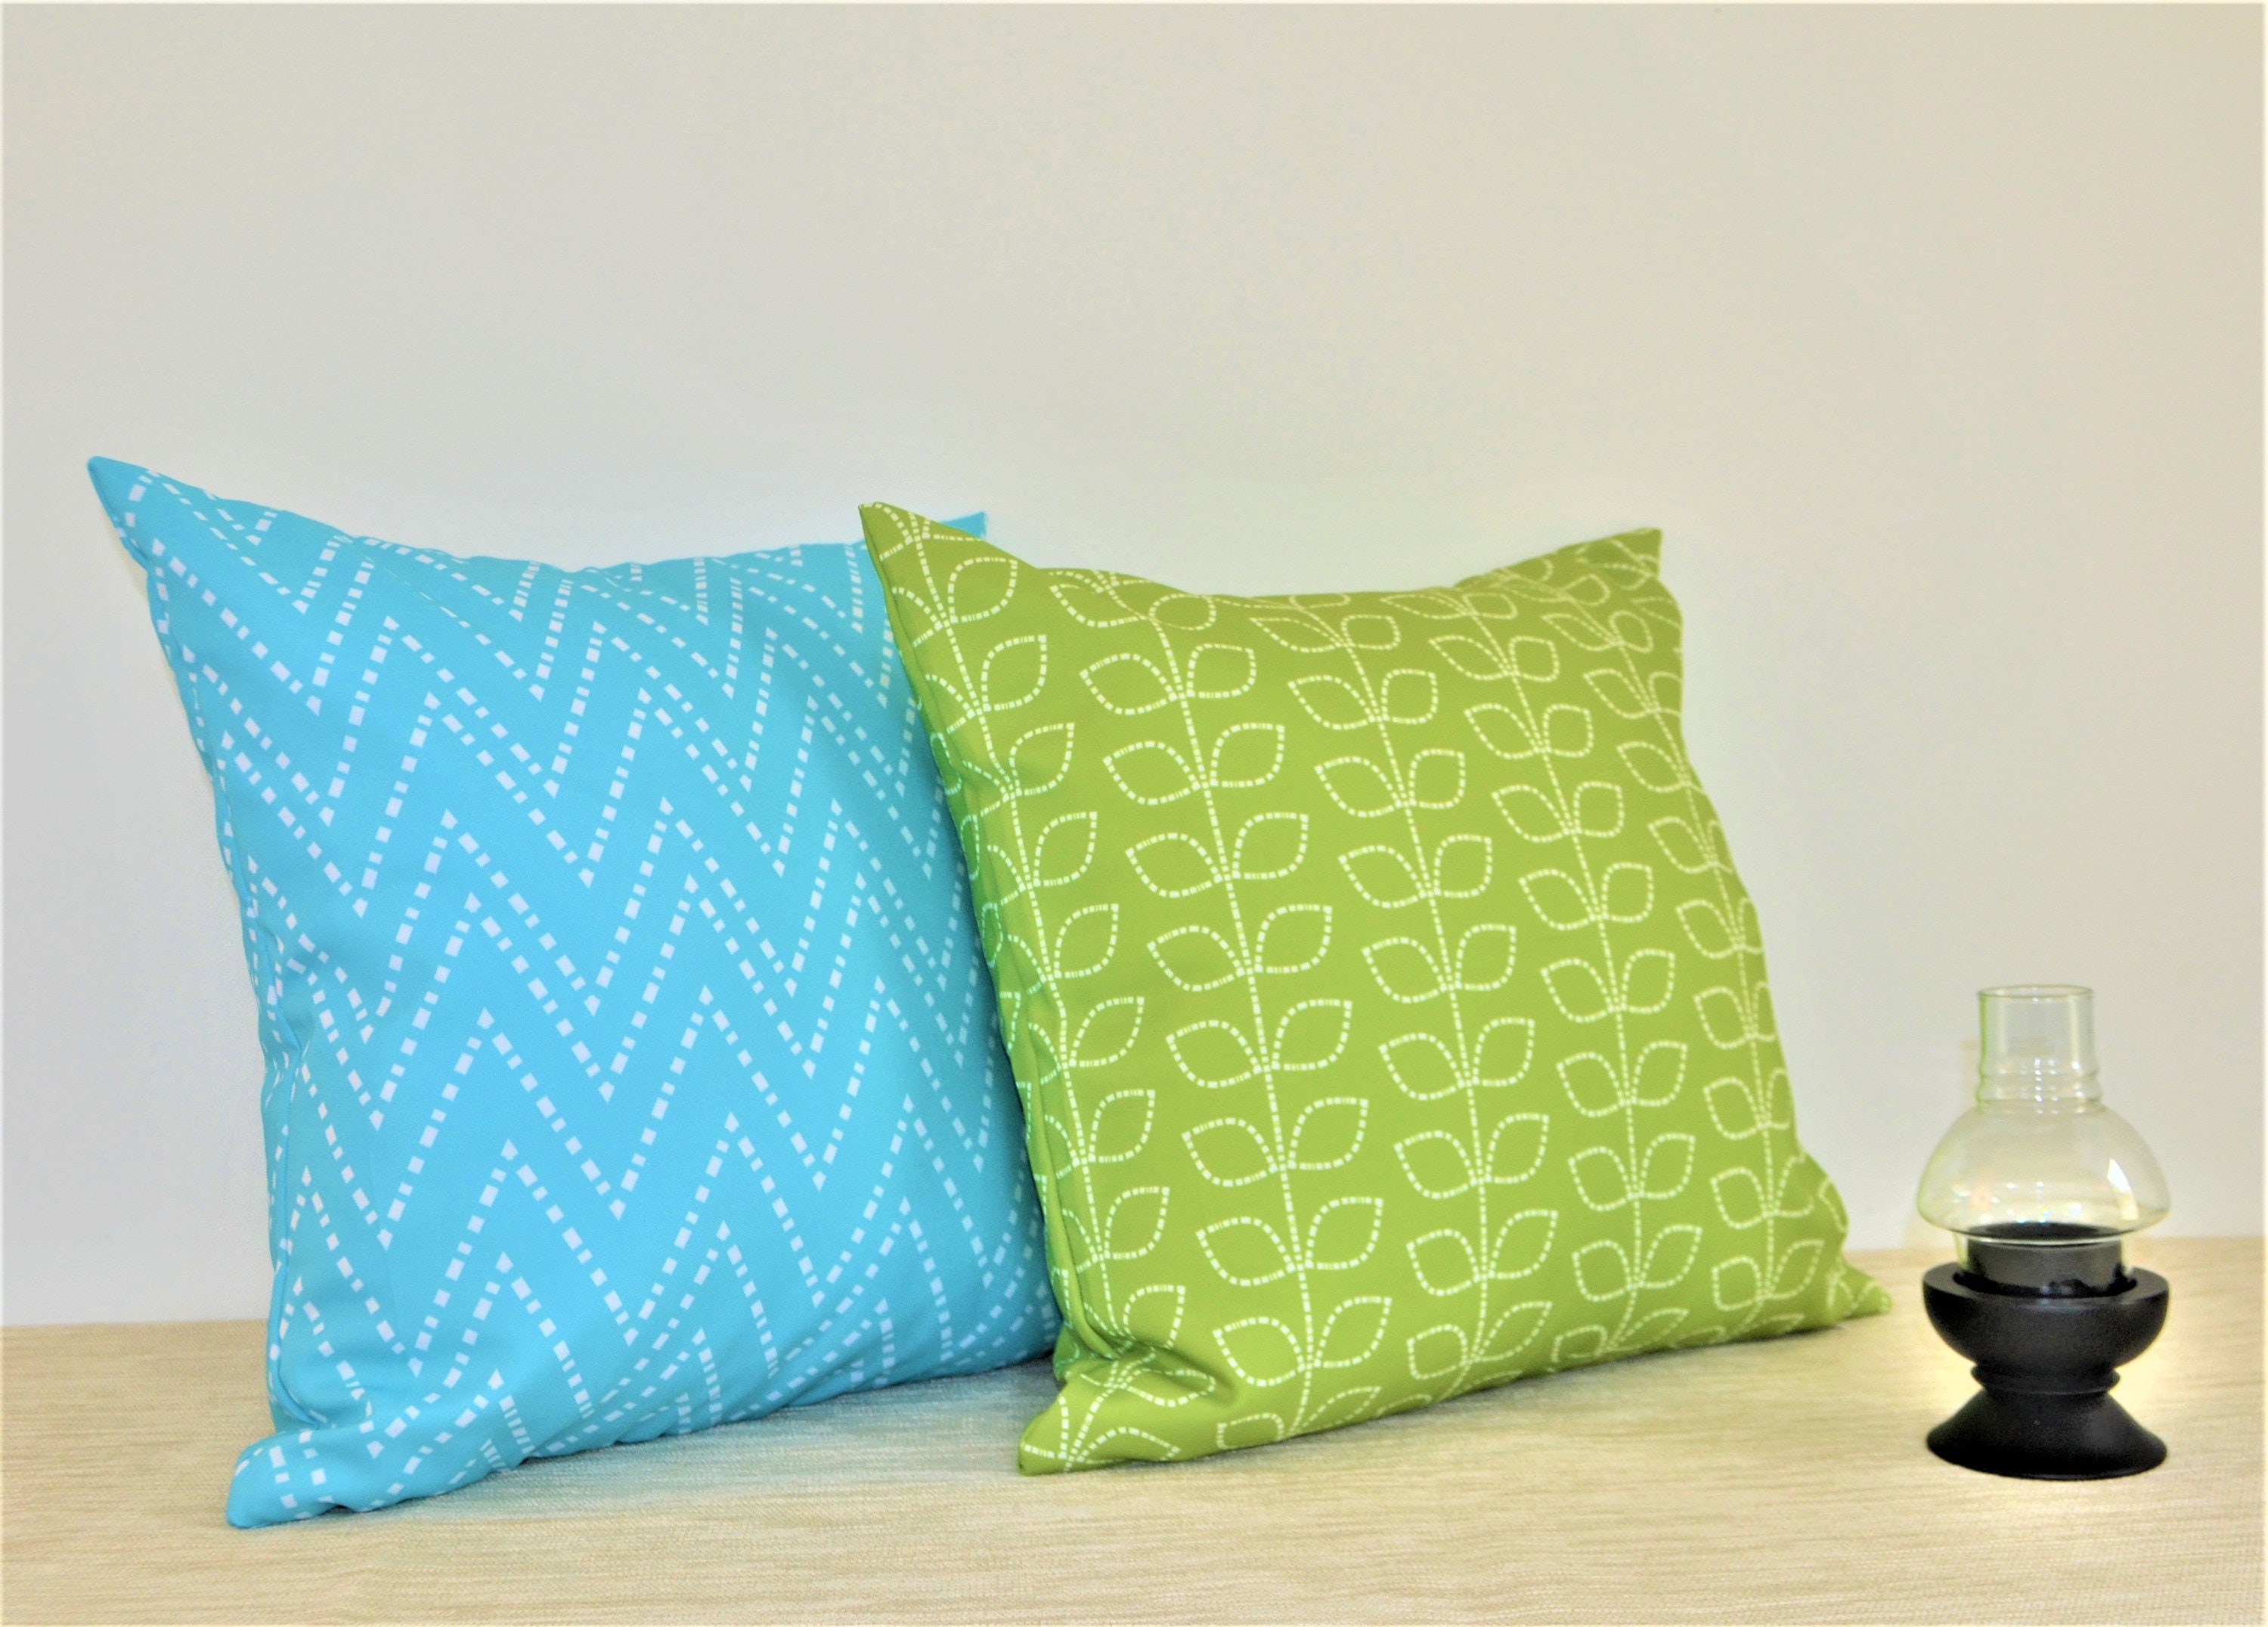 Aqua/Turquoise WATERPROOF OUTDOOR cushion cover 18" Patio Pillow "Oceana" 